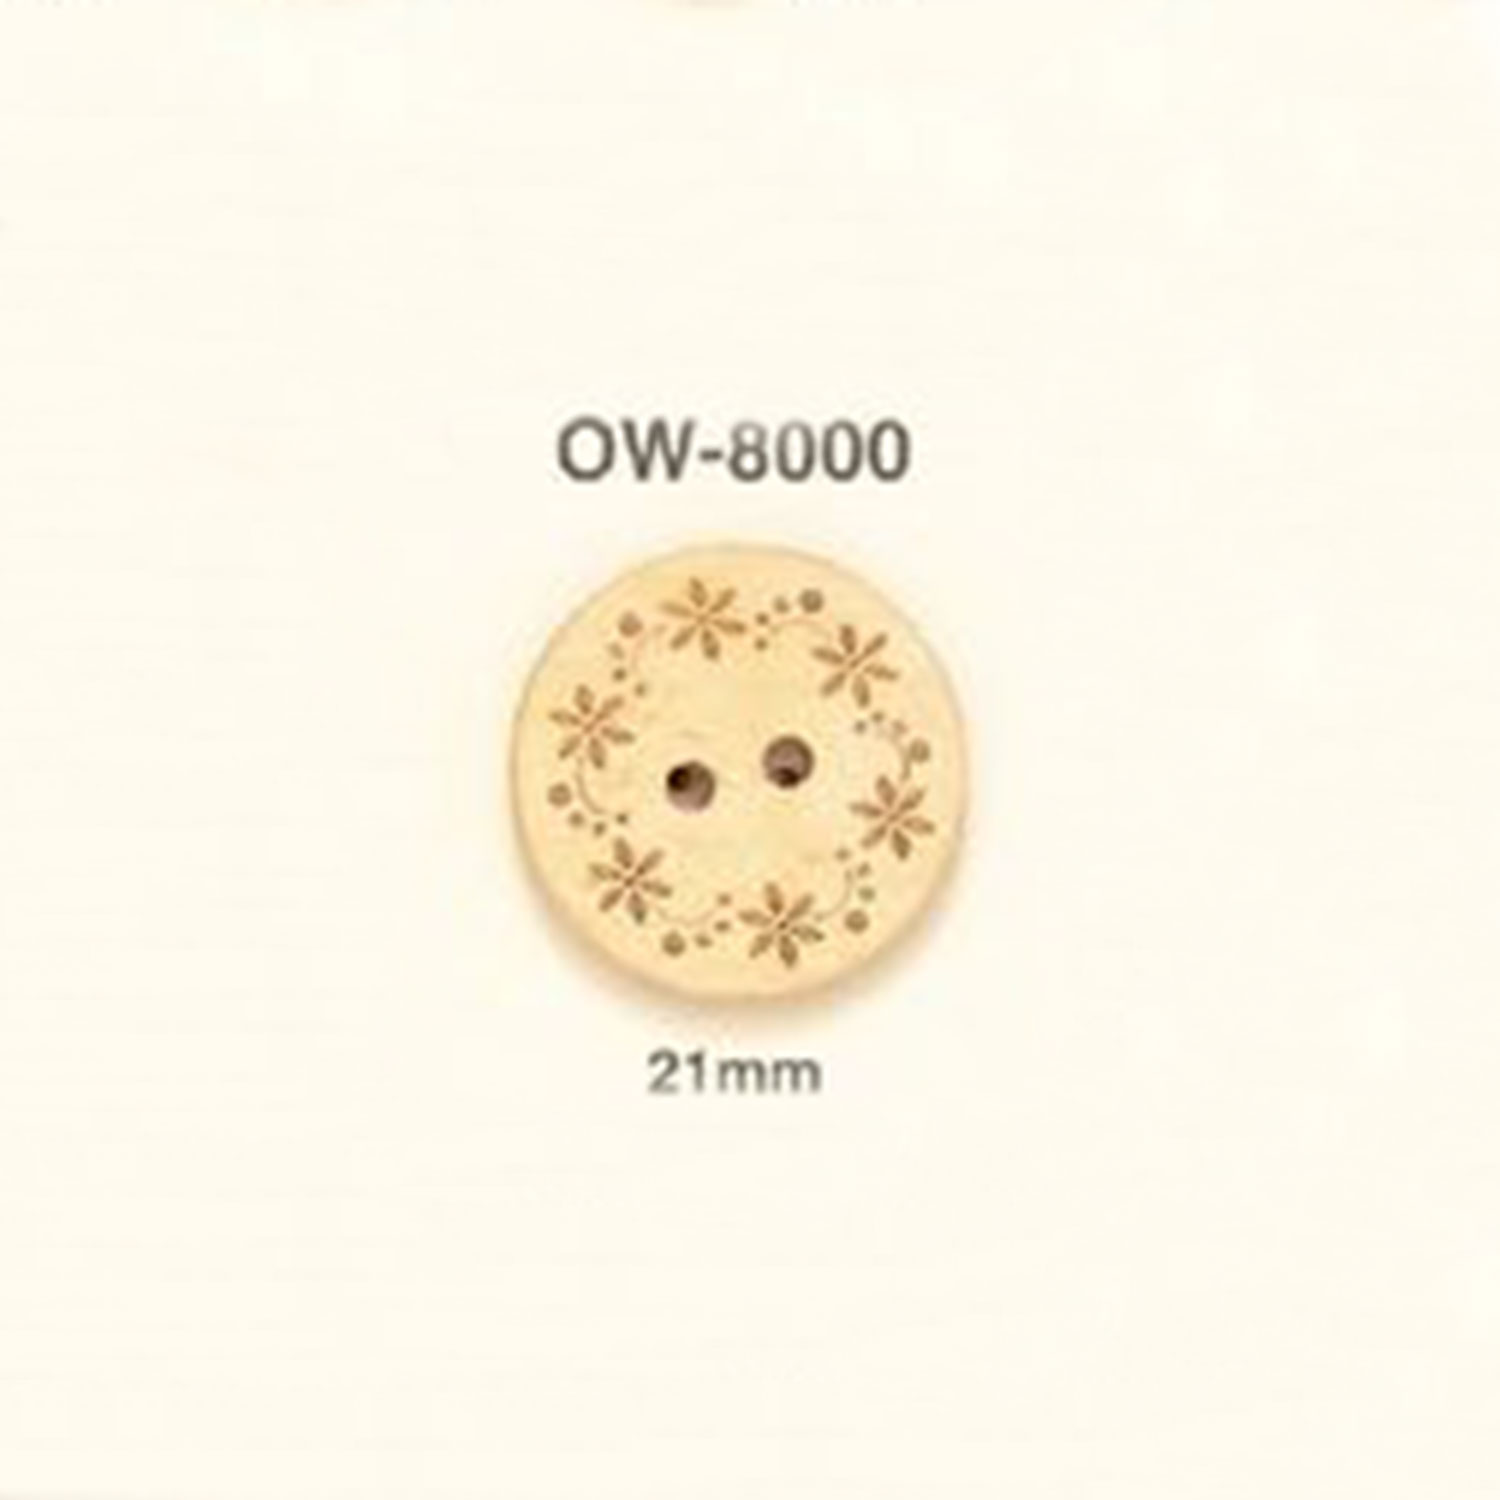 OW-8000 Blumenmotiv Holzknopf[Taste] IRIS